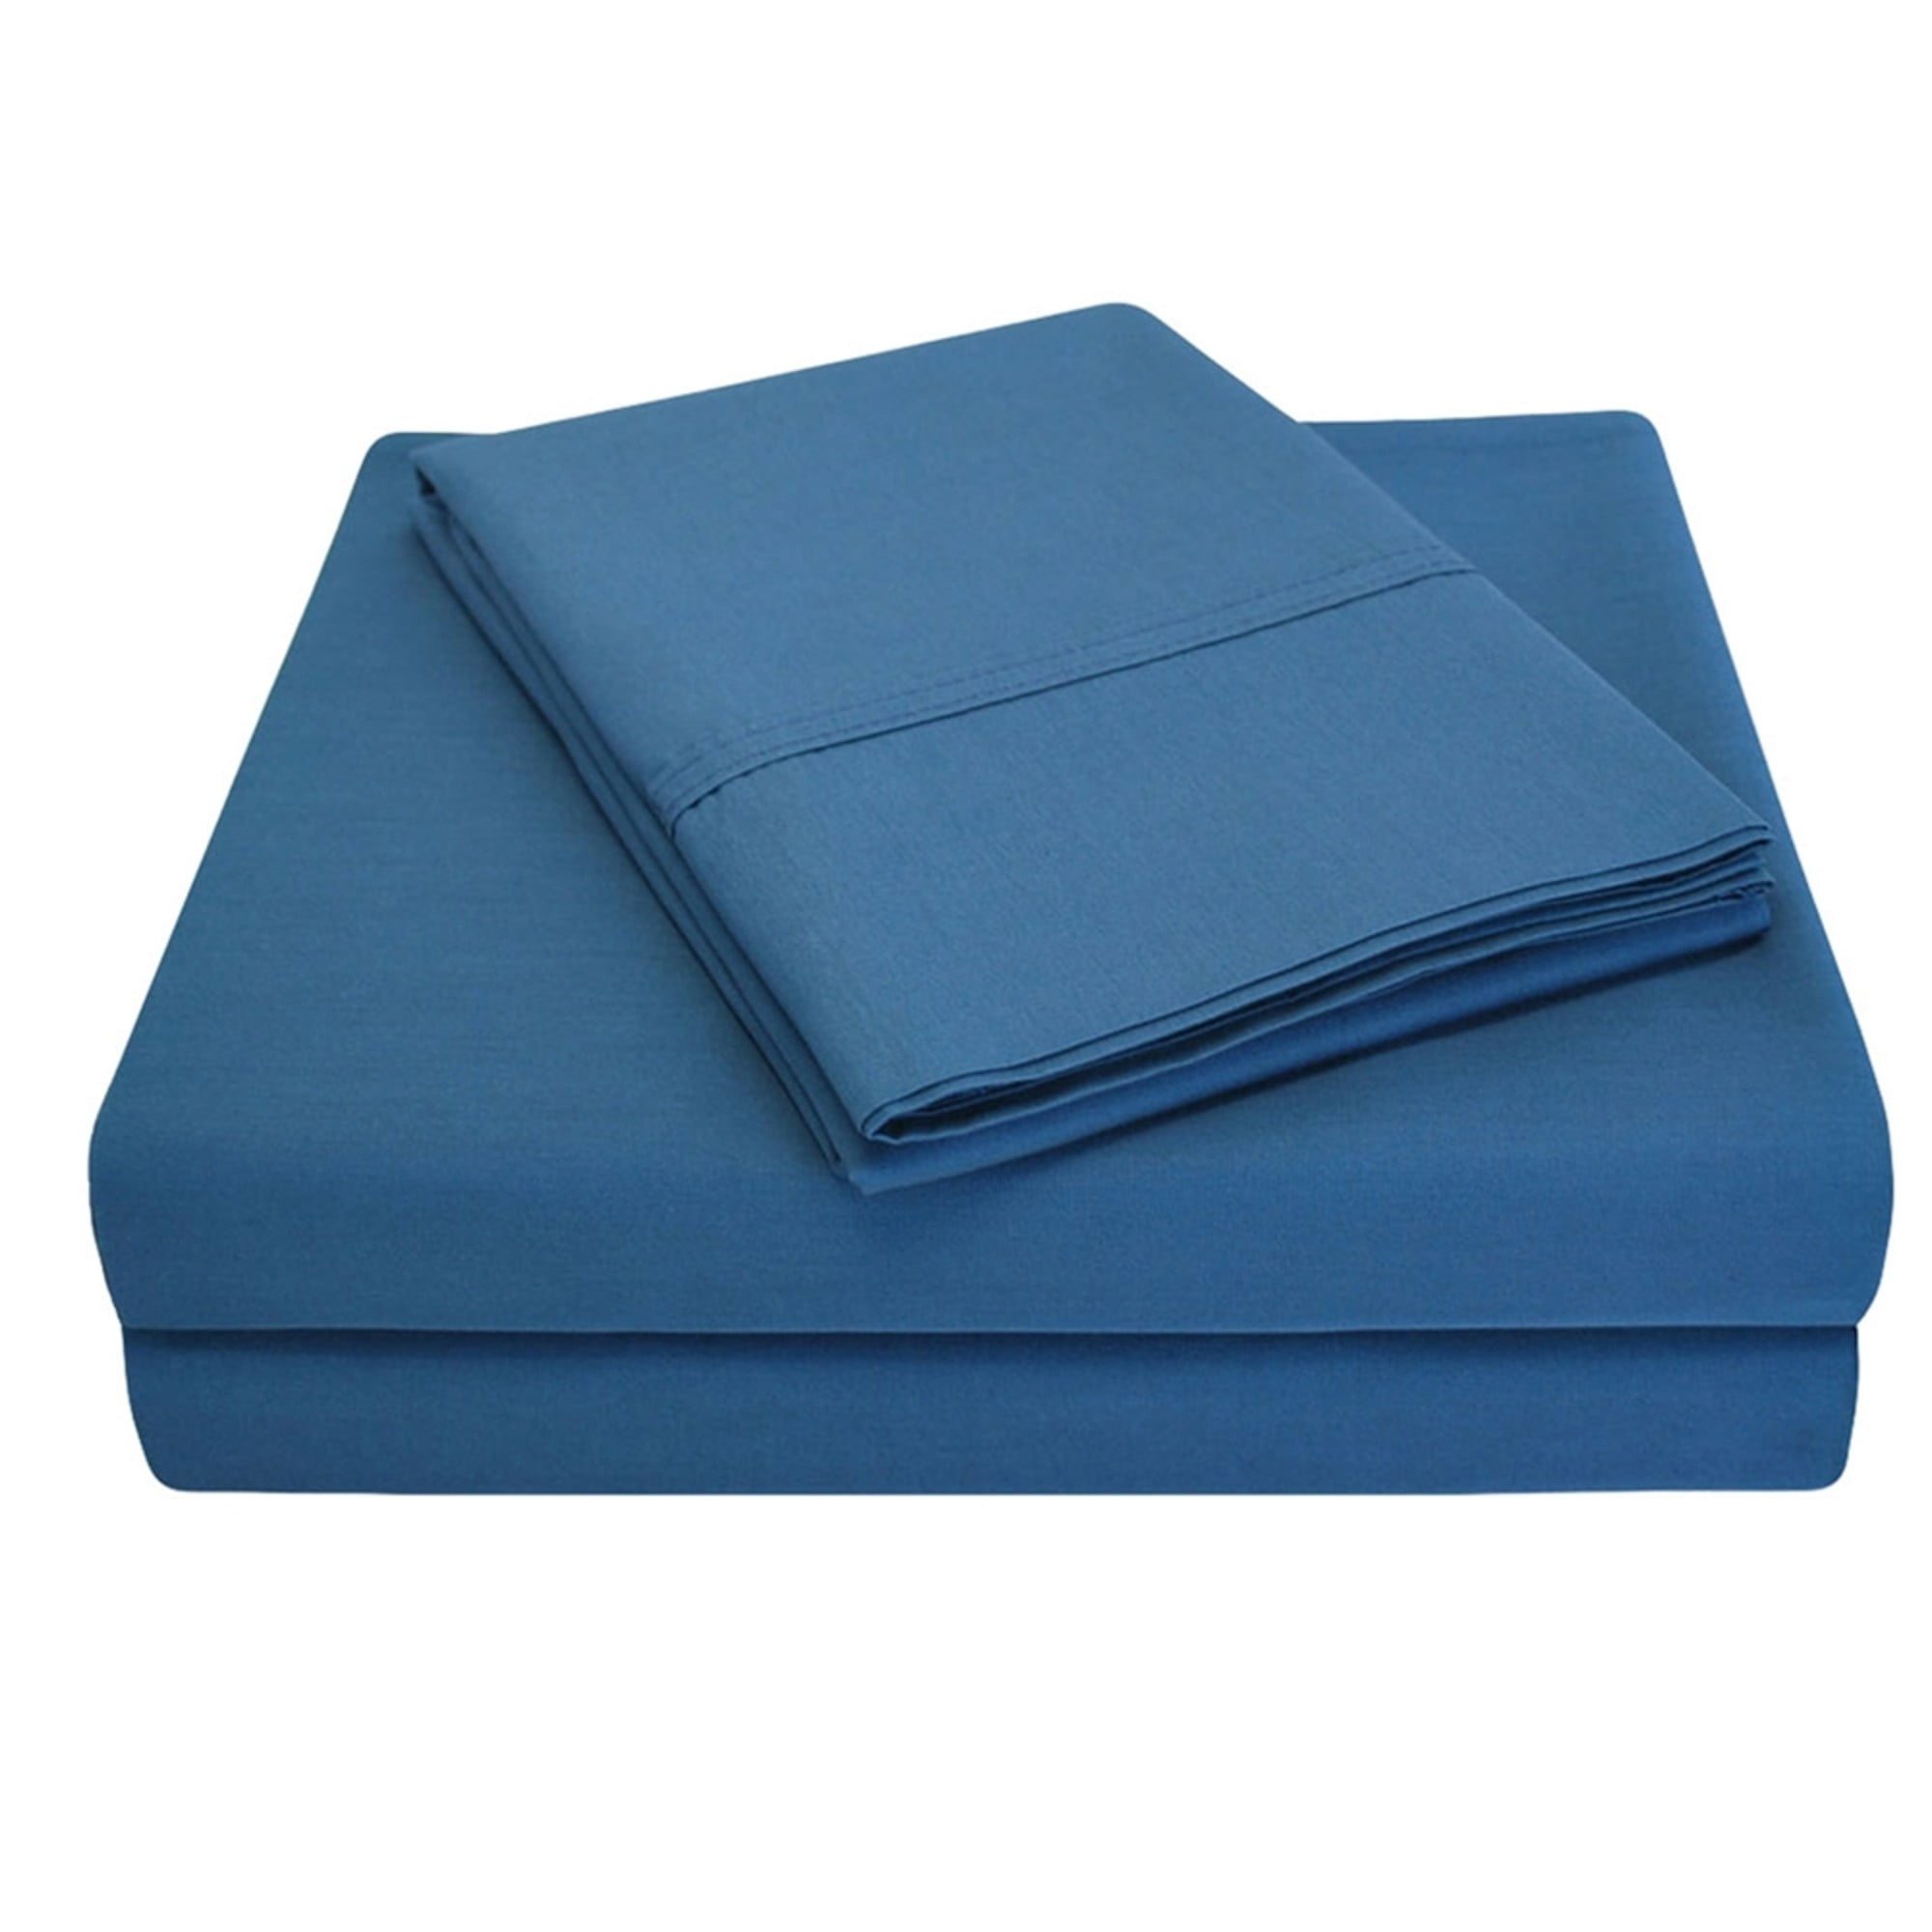 2-Pieces Crown Blue King SUPERIOR Cotton Percale Pillowcase Set 